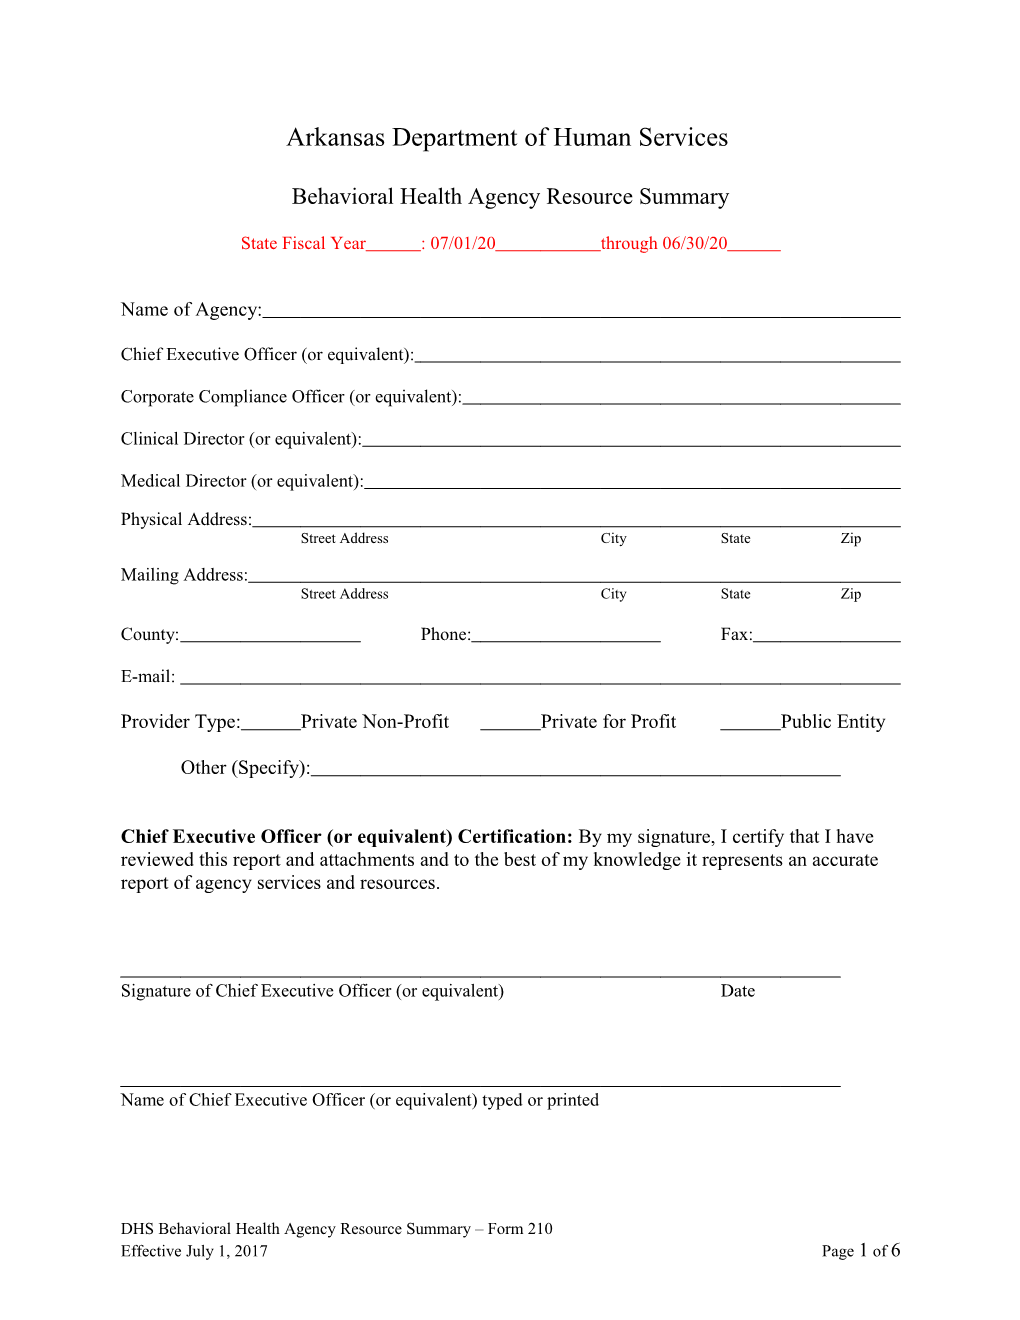 DHS BEHAVIORAL HEALTH AGENCY Form 210 - BHA Resource Summary